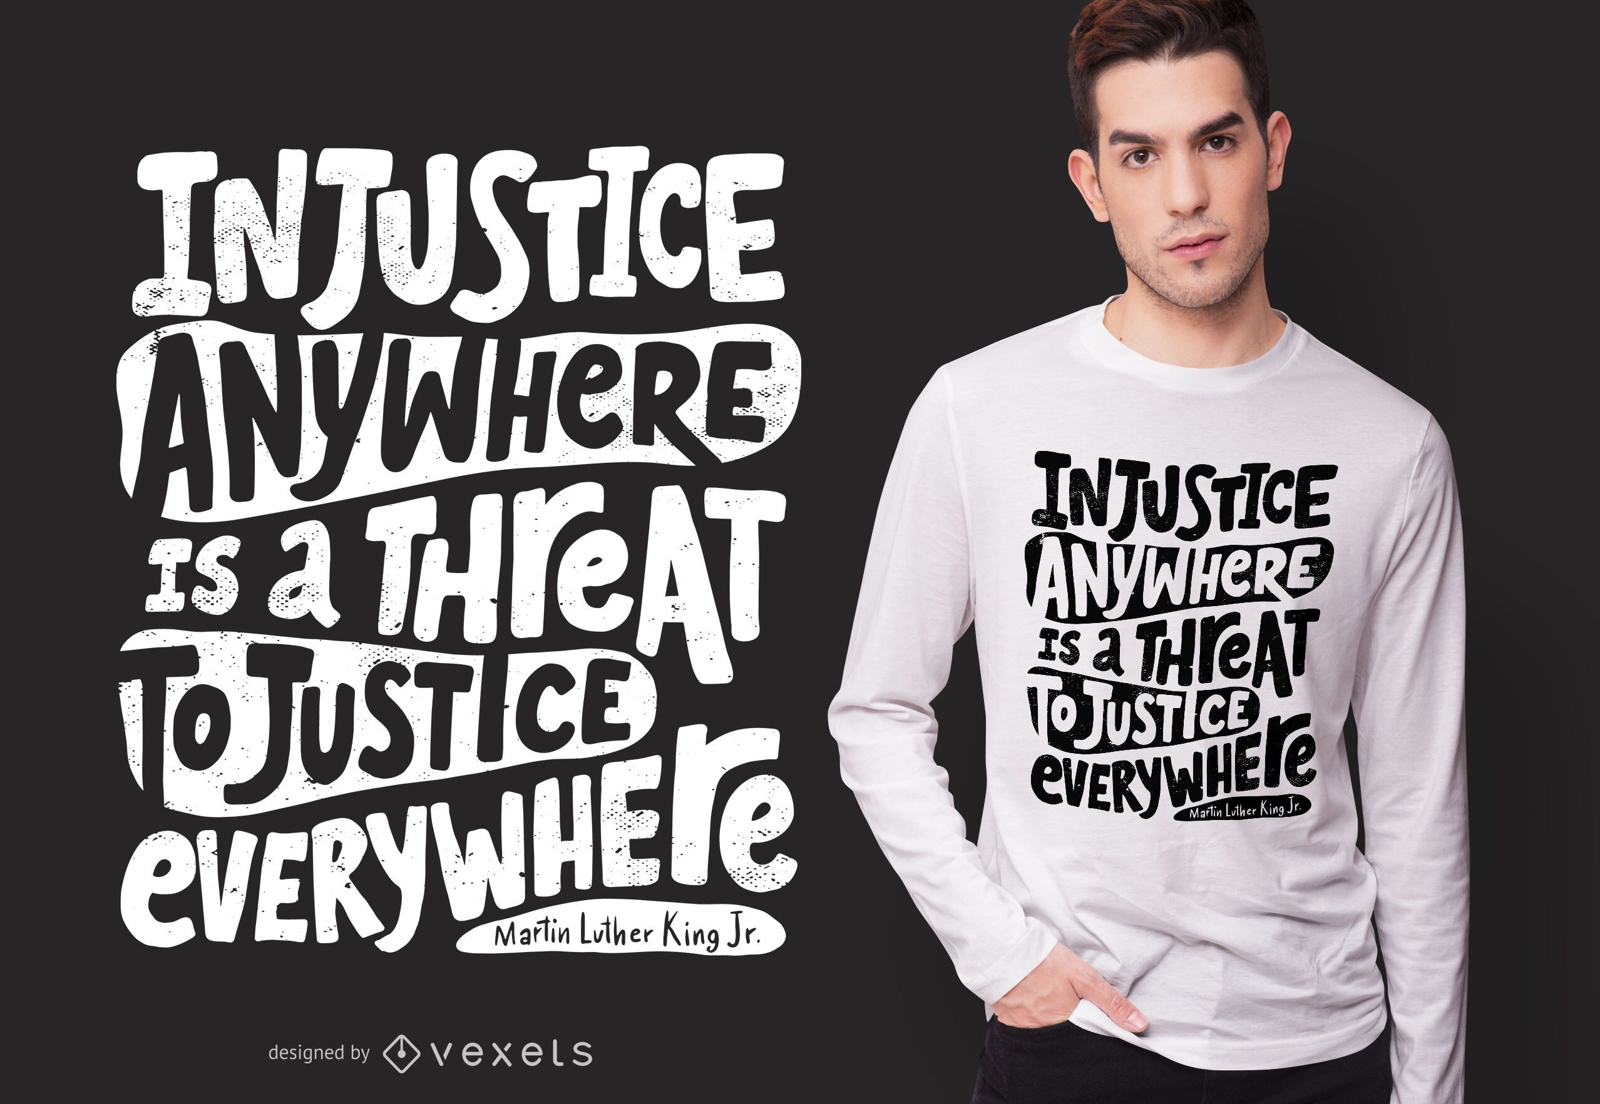 Dise?o de camiseta de cita de injusticia social